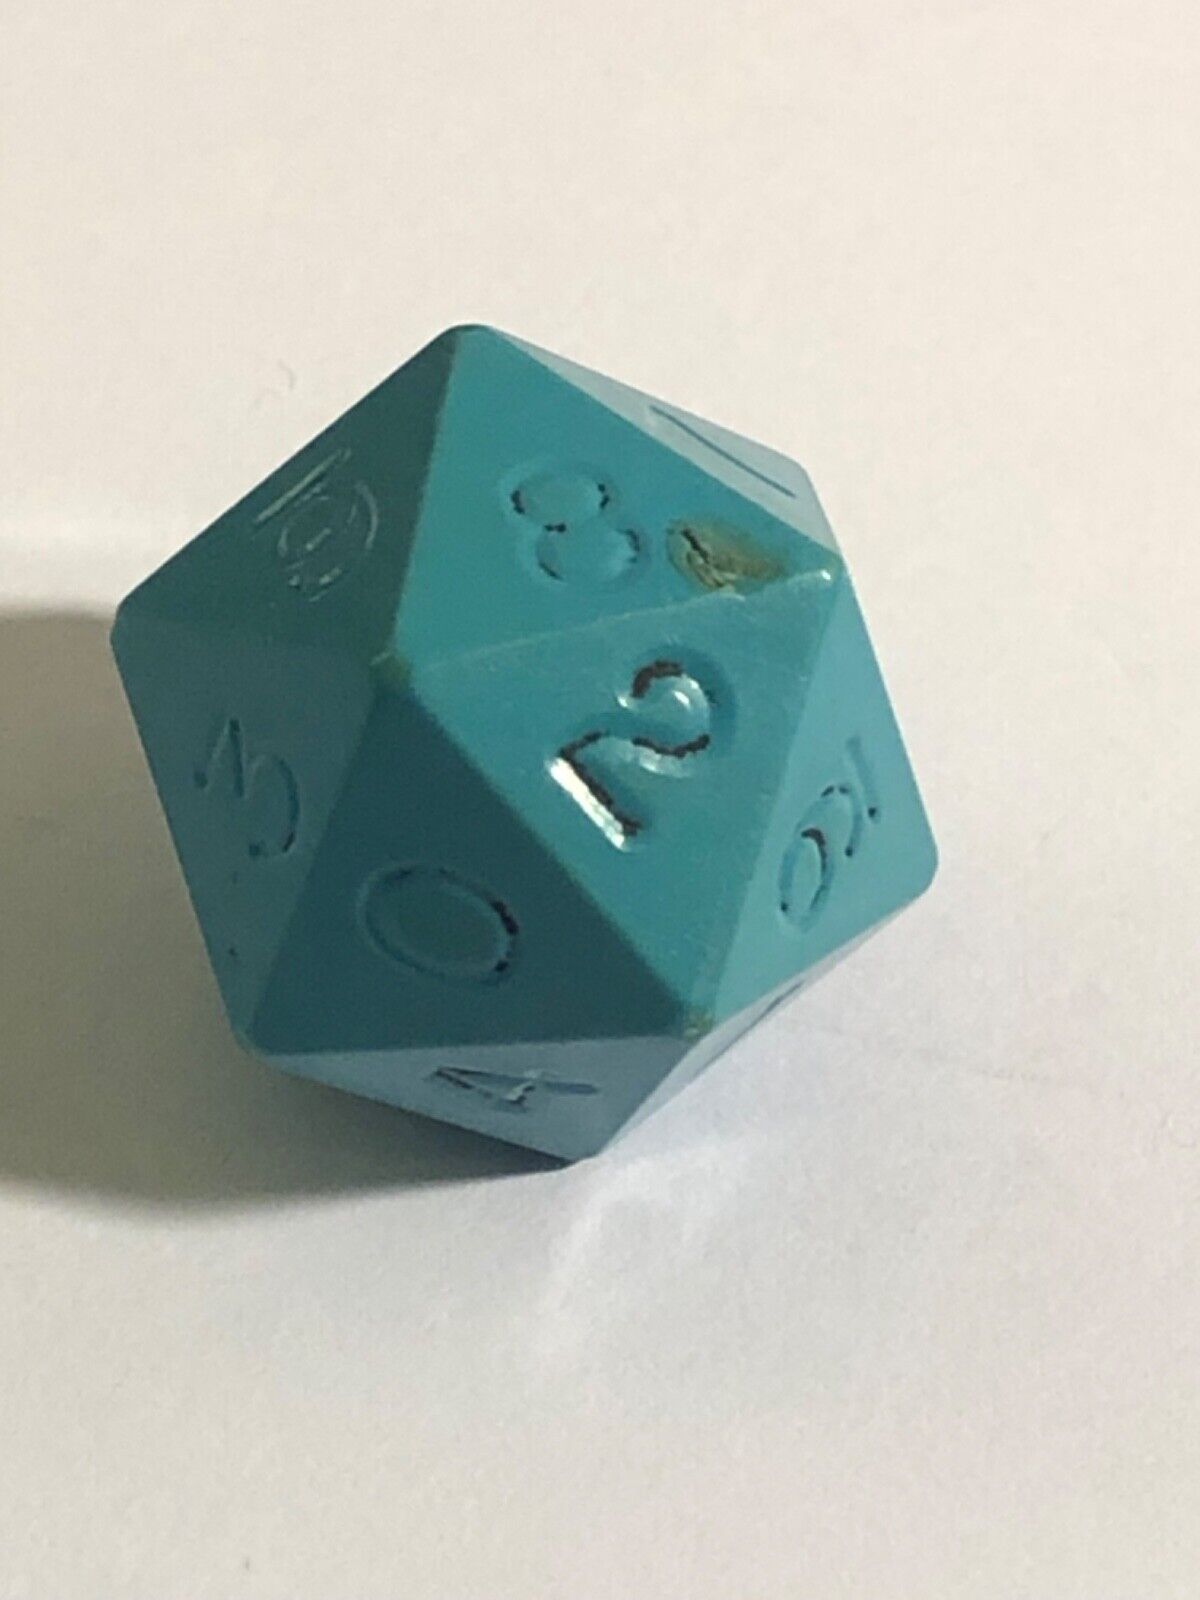 Slightly darker blue moldvay ? mentzer ? icosahedron d20 dnd dice 082023cAE